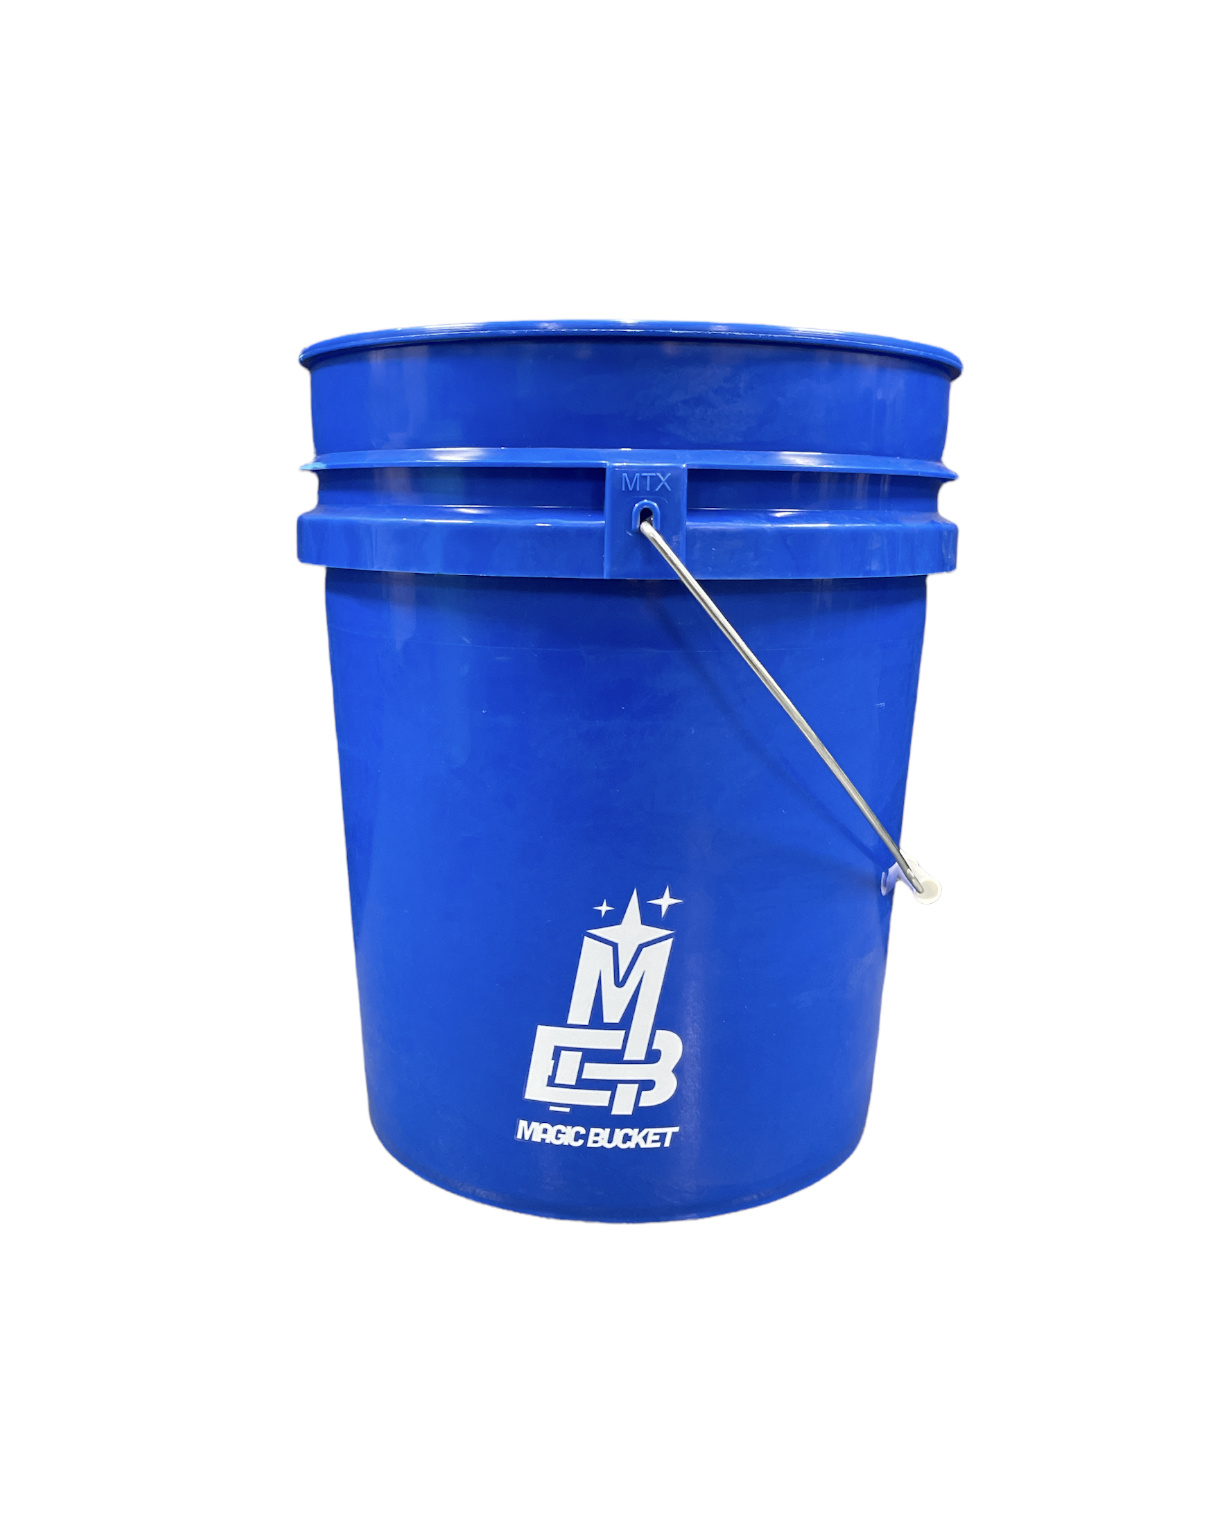 Nuke Guys - Blue Bucket 5 Gallon - Carchemicals